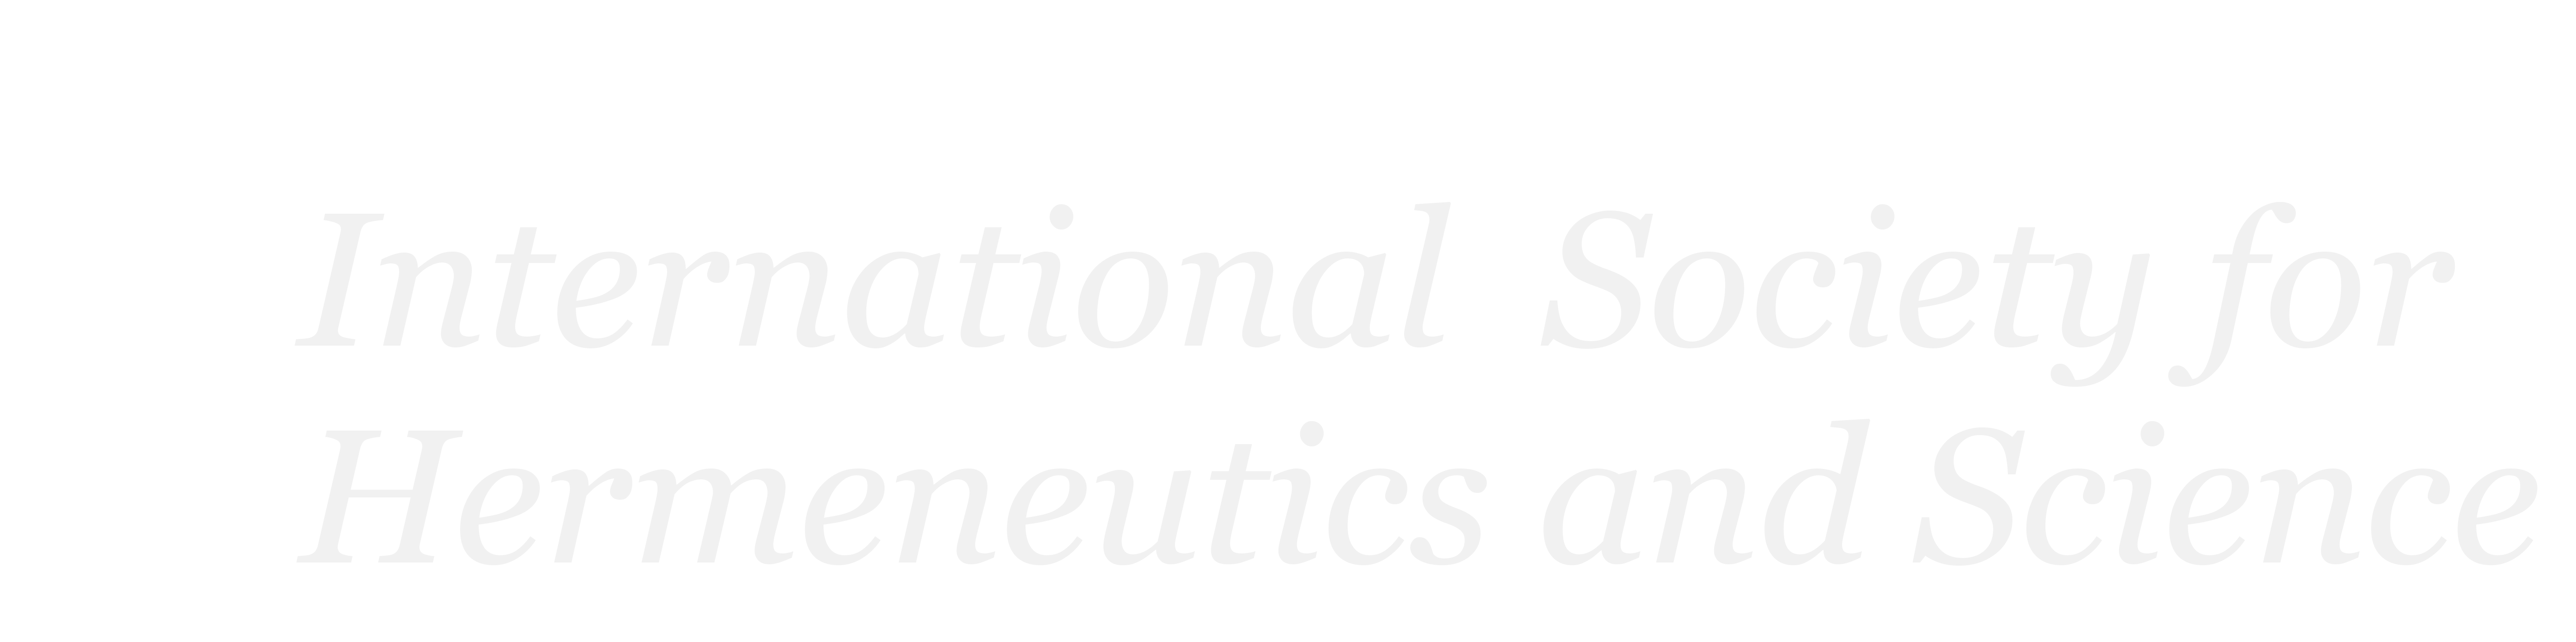 International Society for Hermeneutics and Science